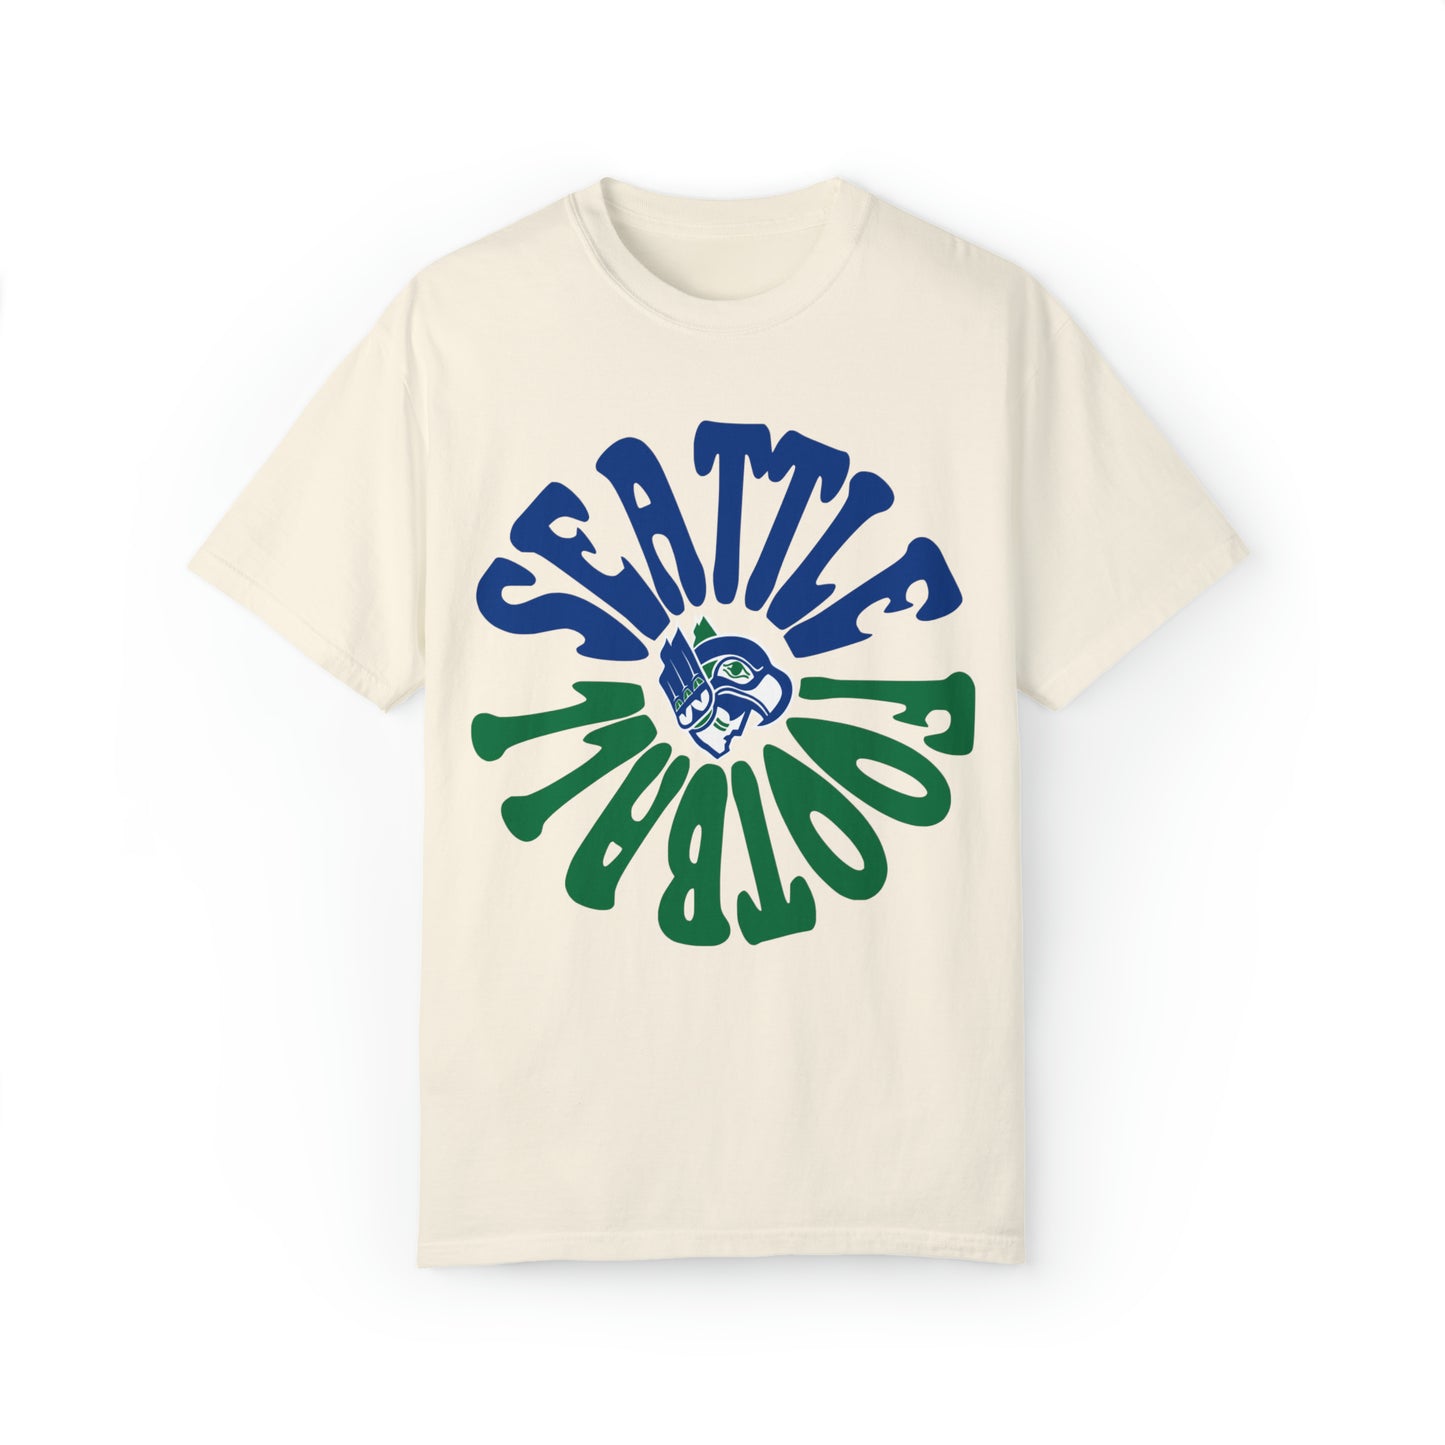 Hippy Retro Seattle Seahawks Comfort Colors T-Shirt - Vintage Style Football Crewneck - Men's & Women's - Design 2